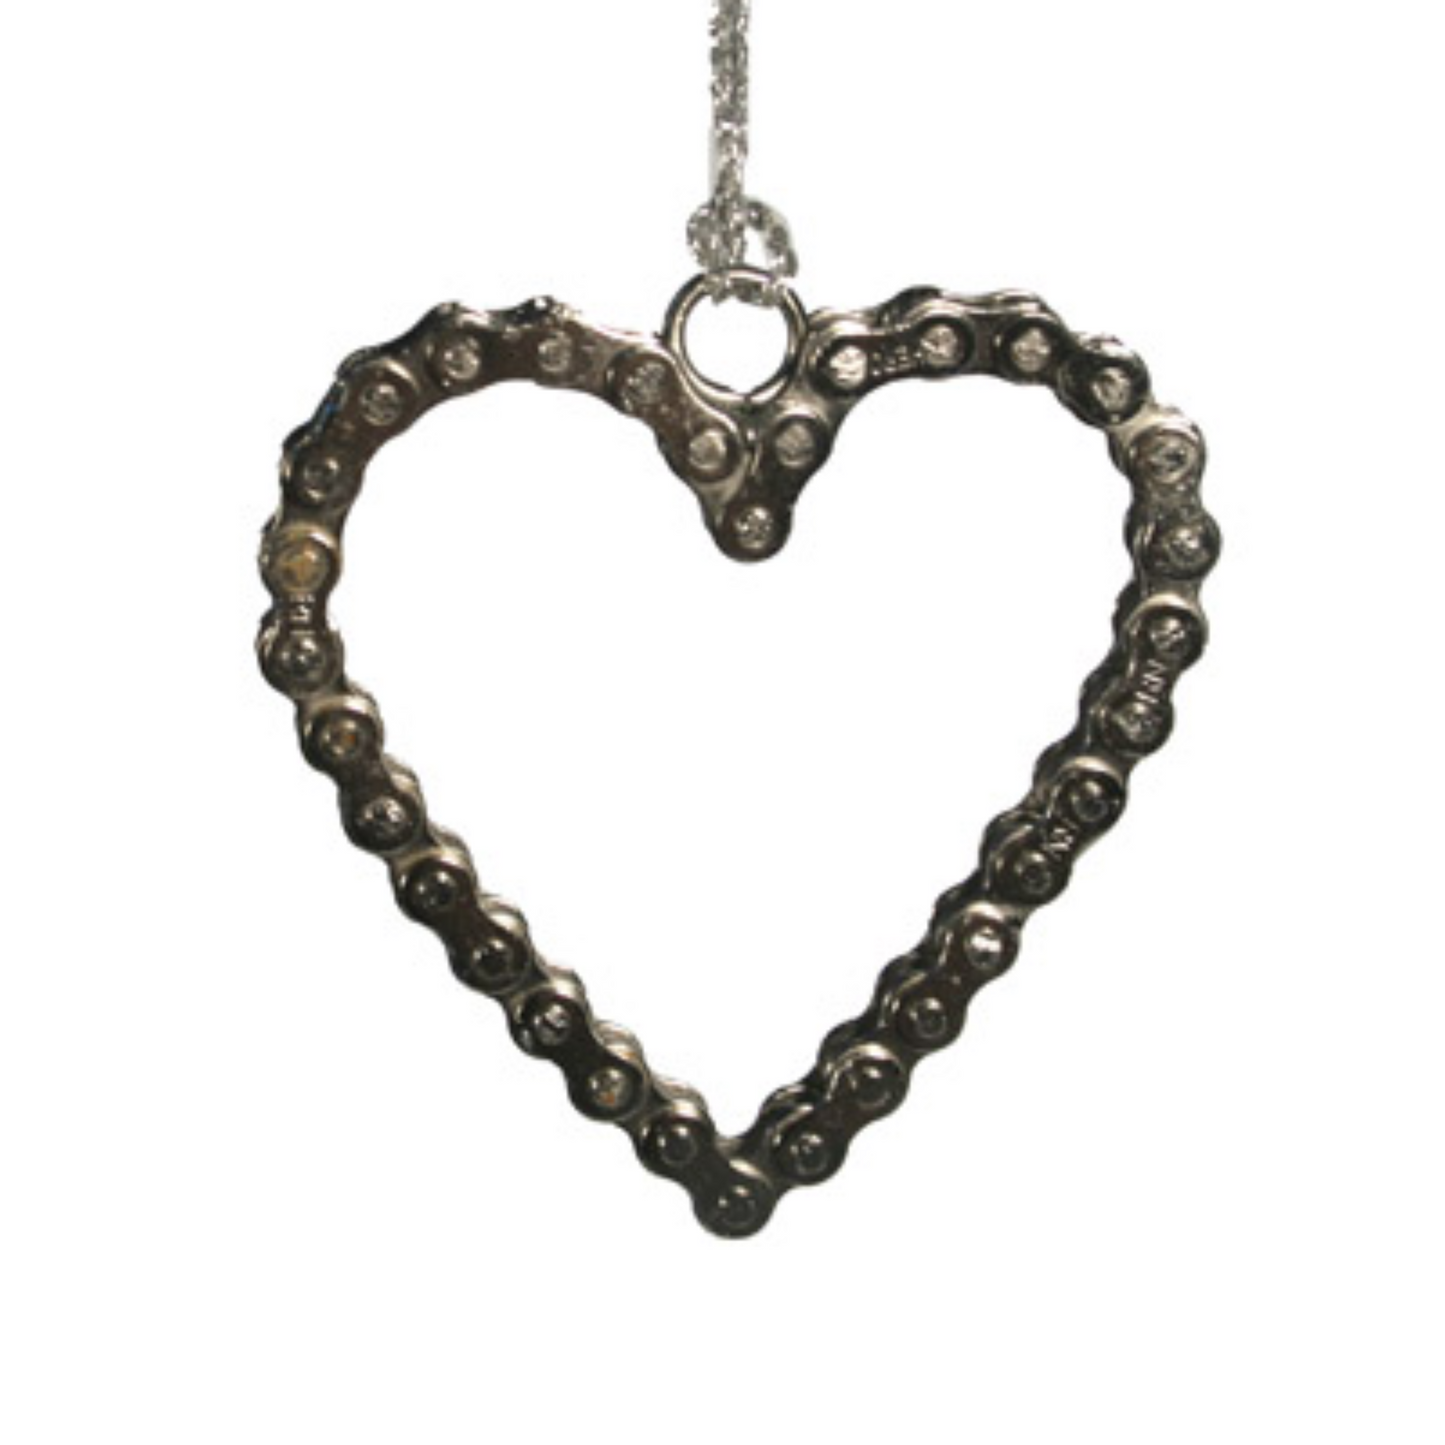 Bike Chain Heart